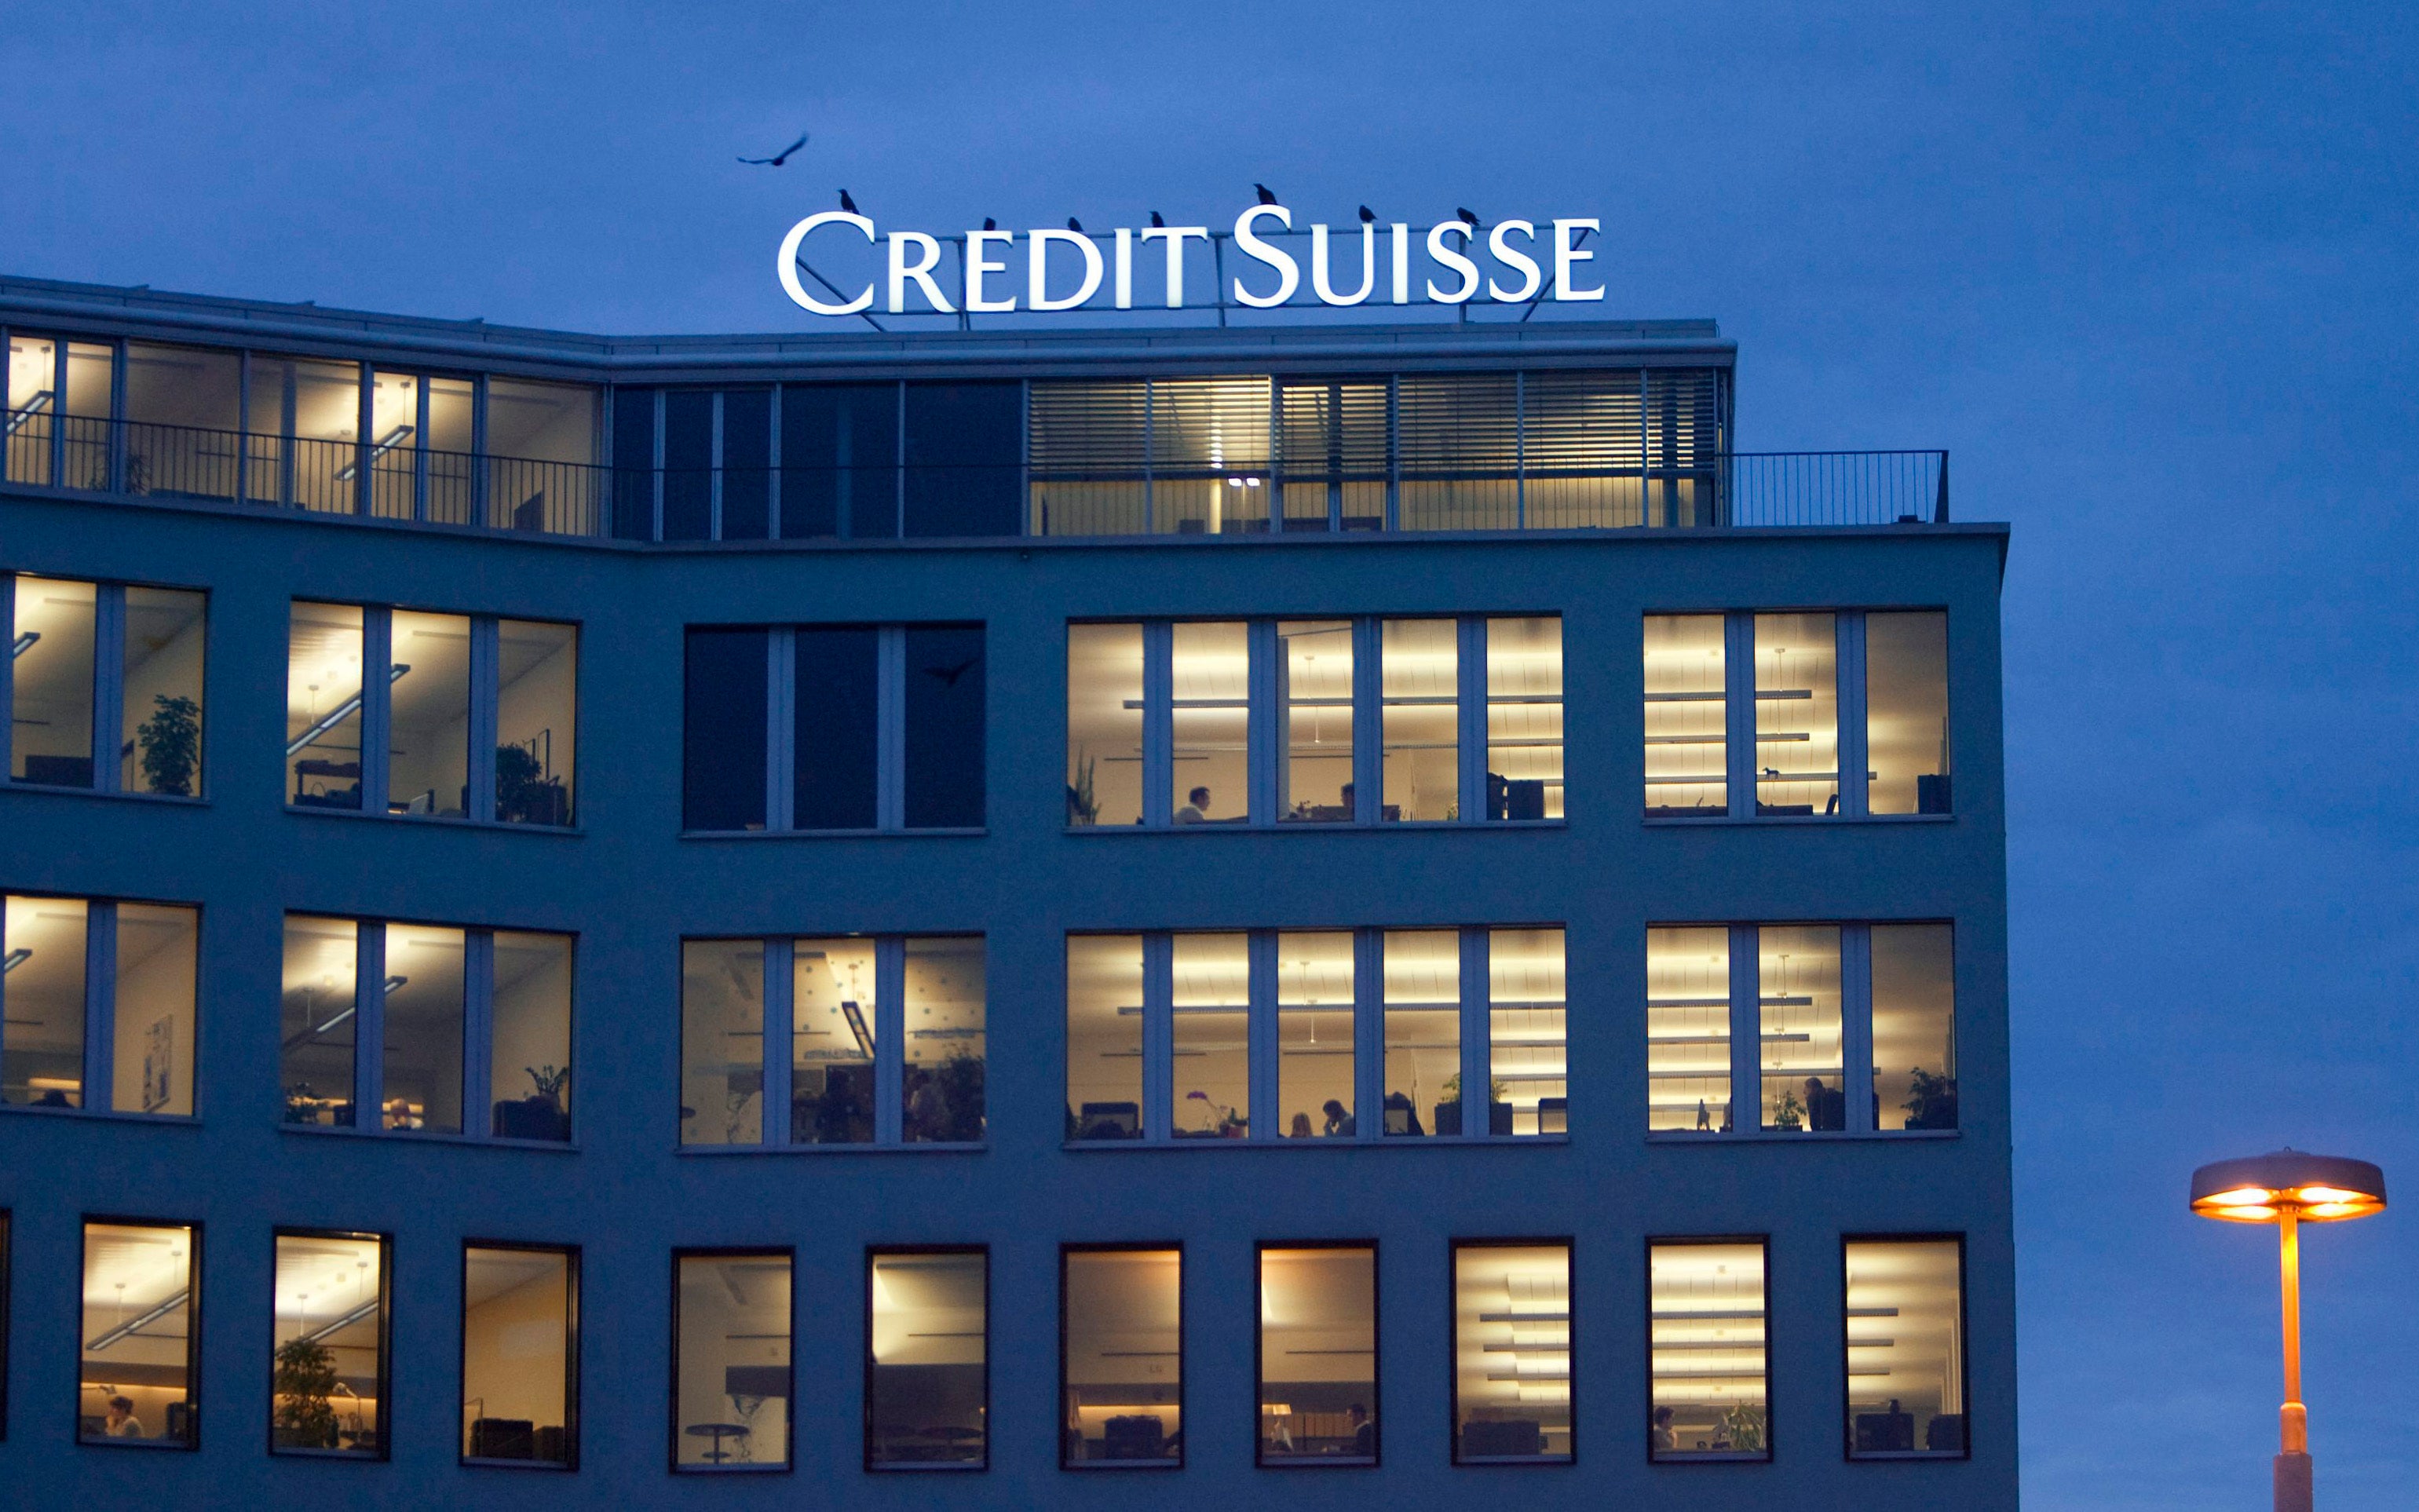 Robert Kiyosaki has said Credit Suisse will be next to fold as the volatile bond market crashes